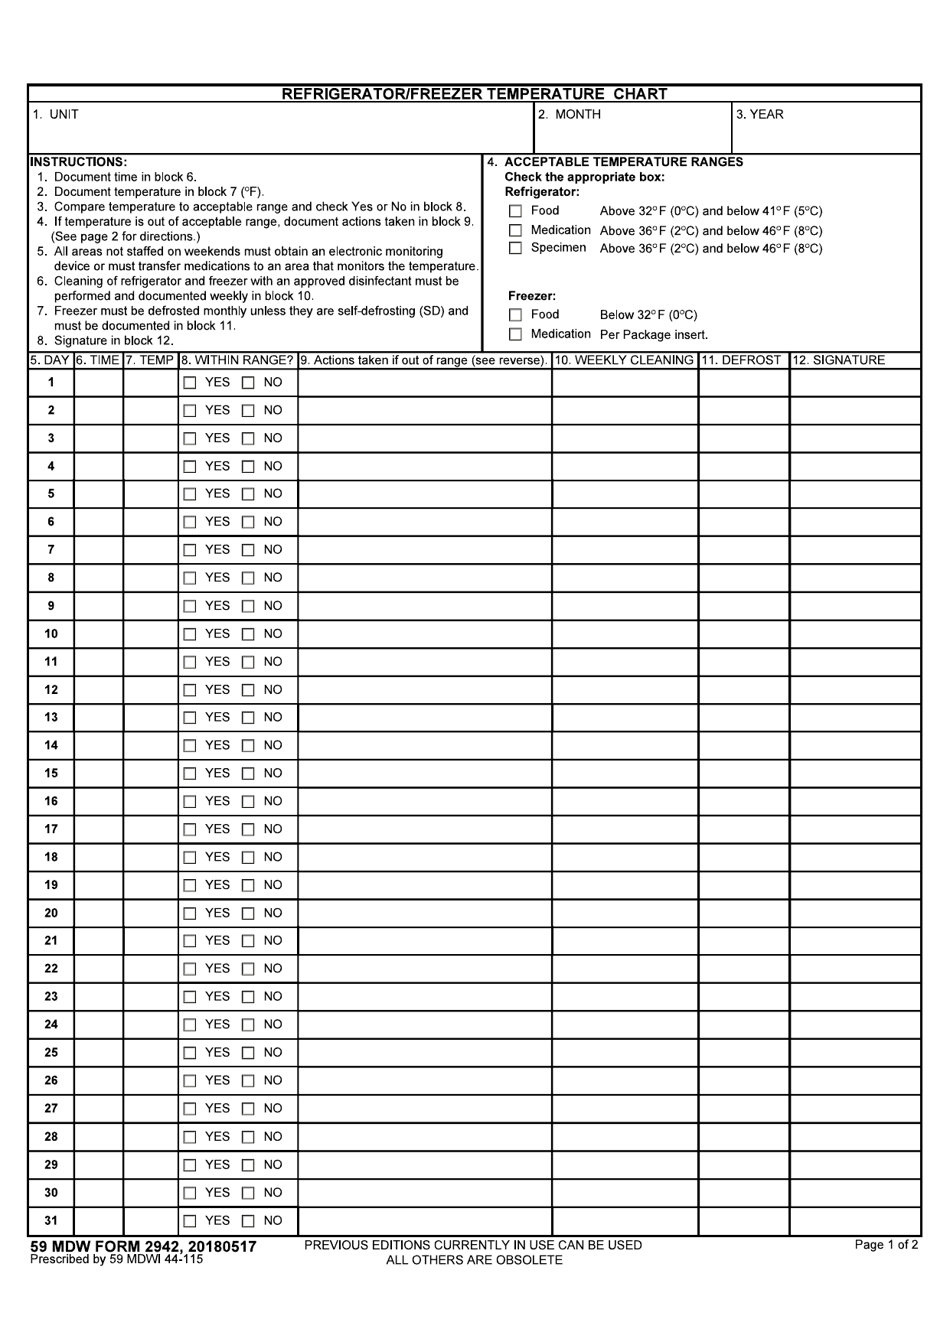 59 MDW Form 2942 Refrigerator / Freezer Temperature Chart, Page 1